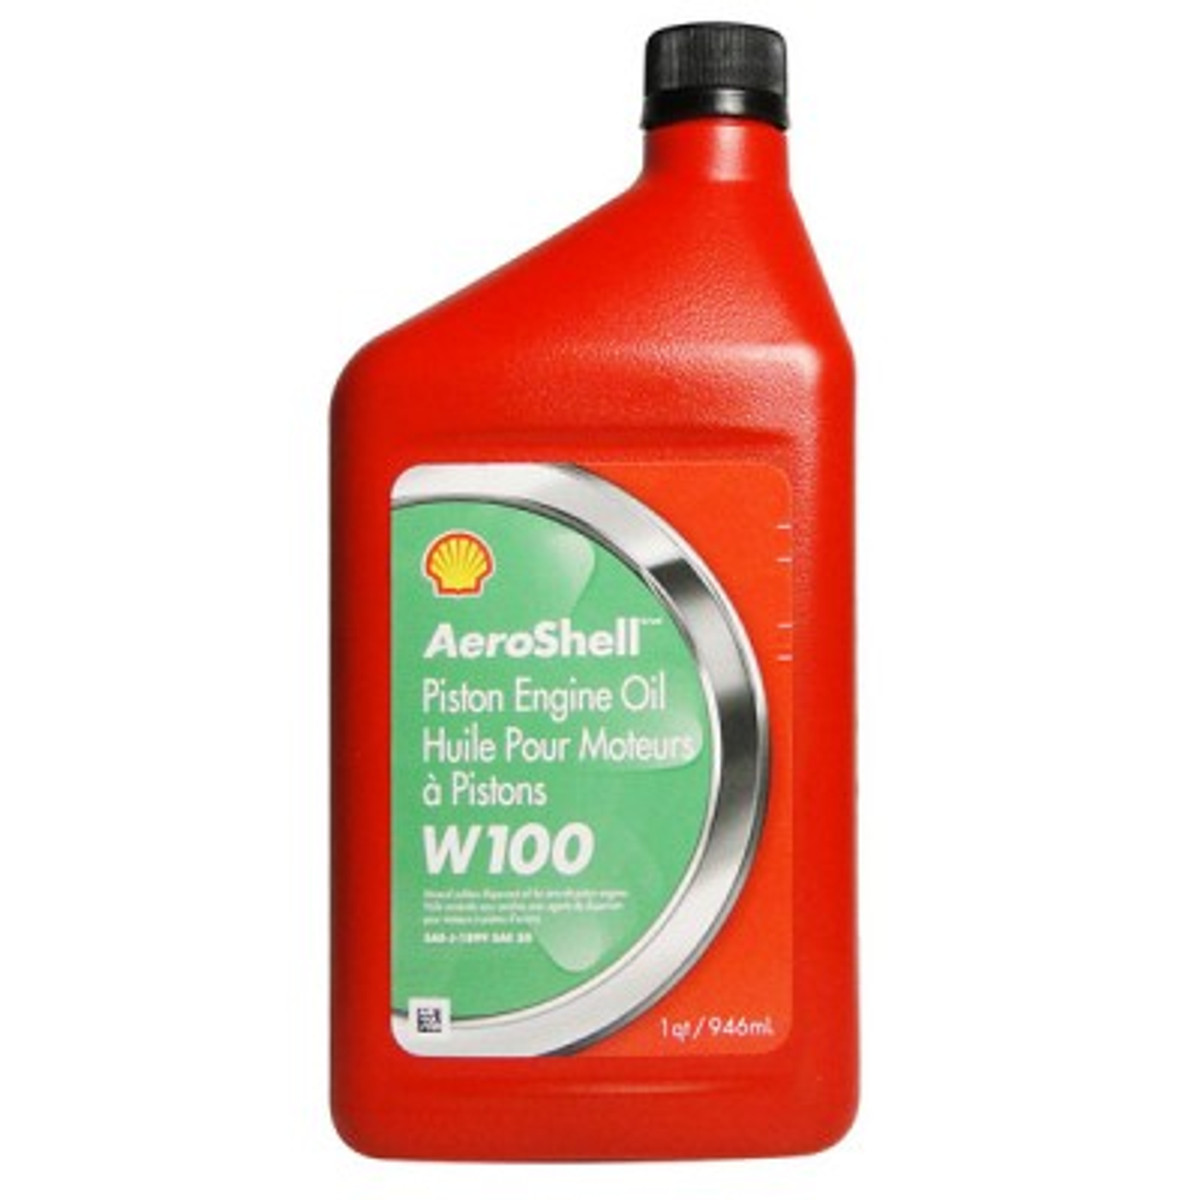  Aeroshell W100 Oil.     Case (6 quarts)